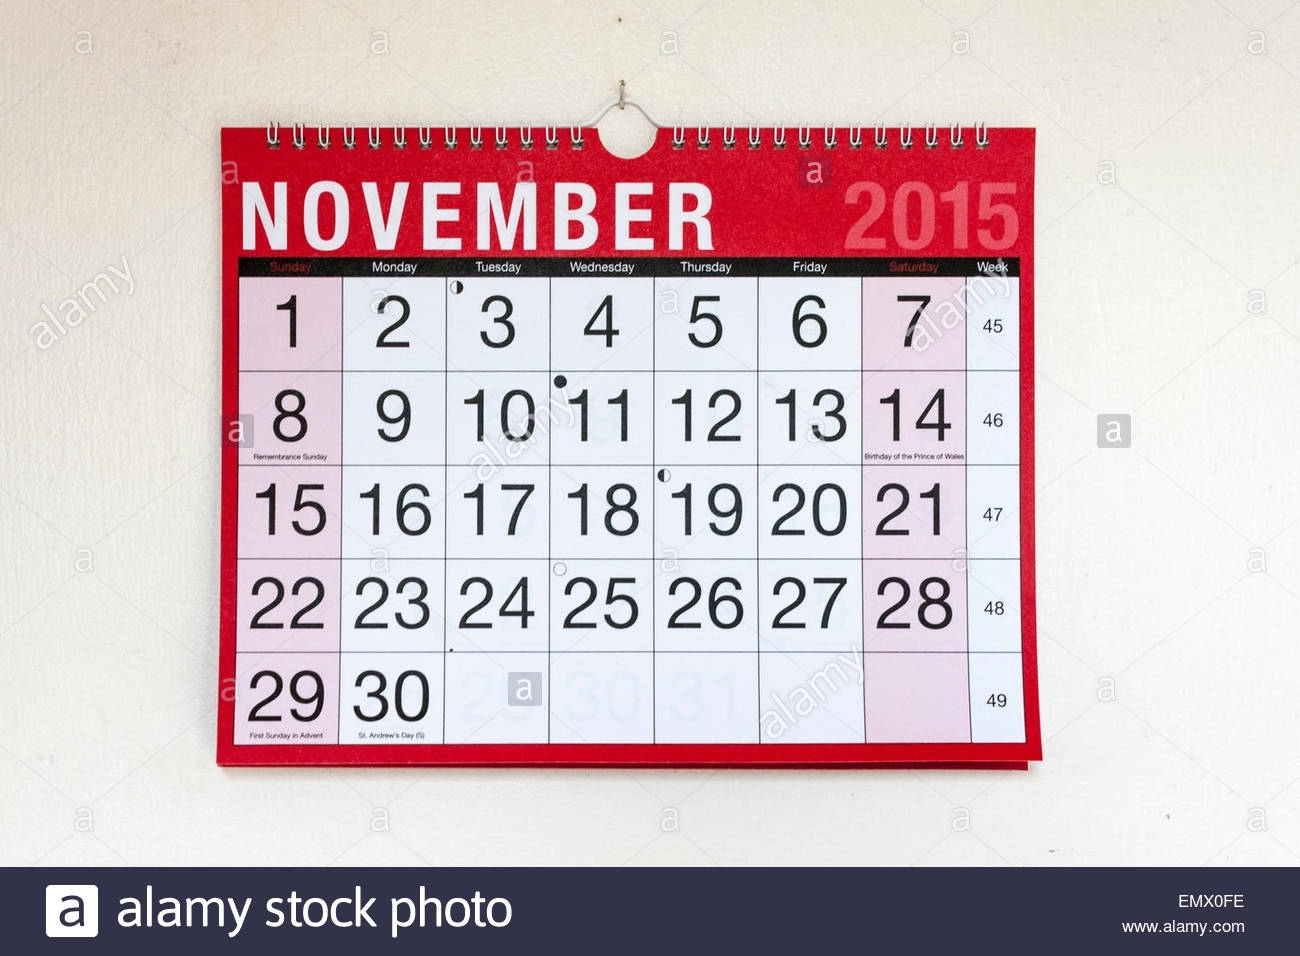 November Calender Stock Photos &amp; November Calender Stock Images - Alamy regarding Medroxyprogesterone Perpetual Calendar 12-14 Weeks